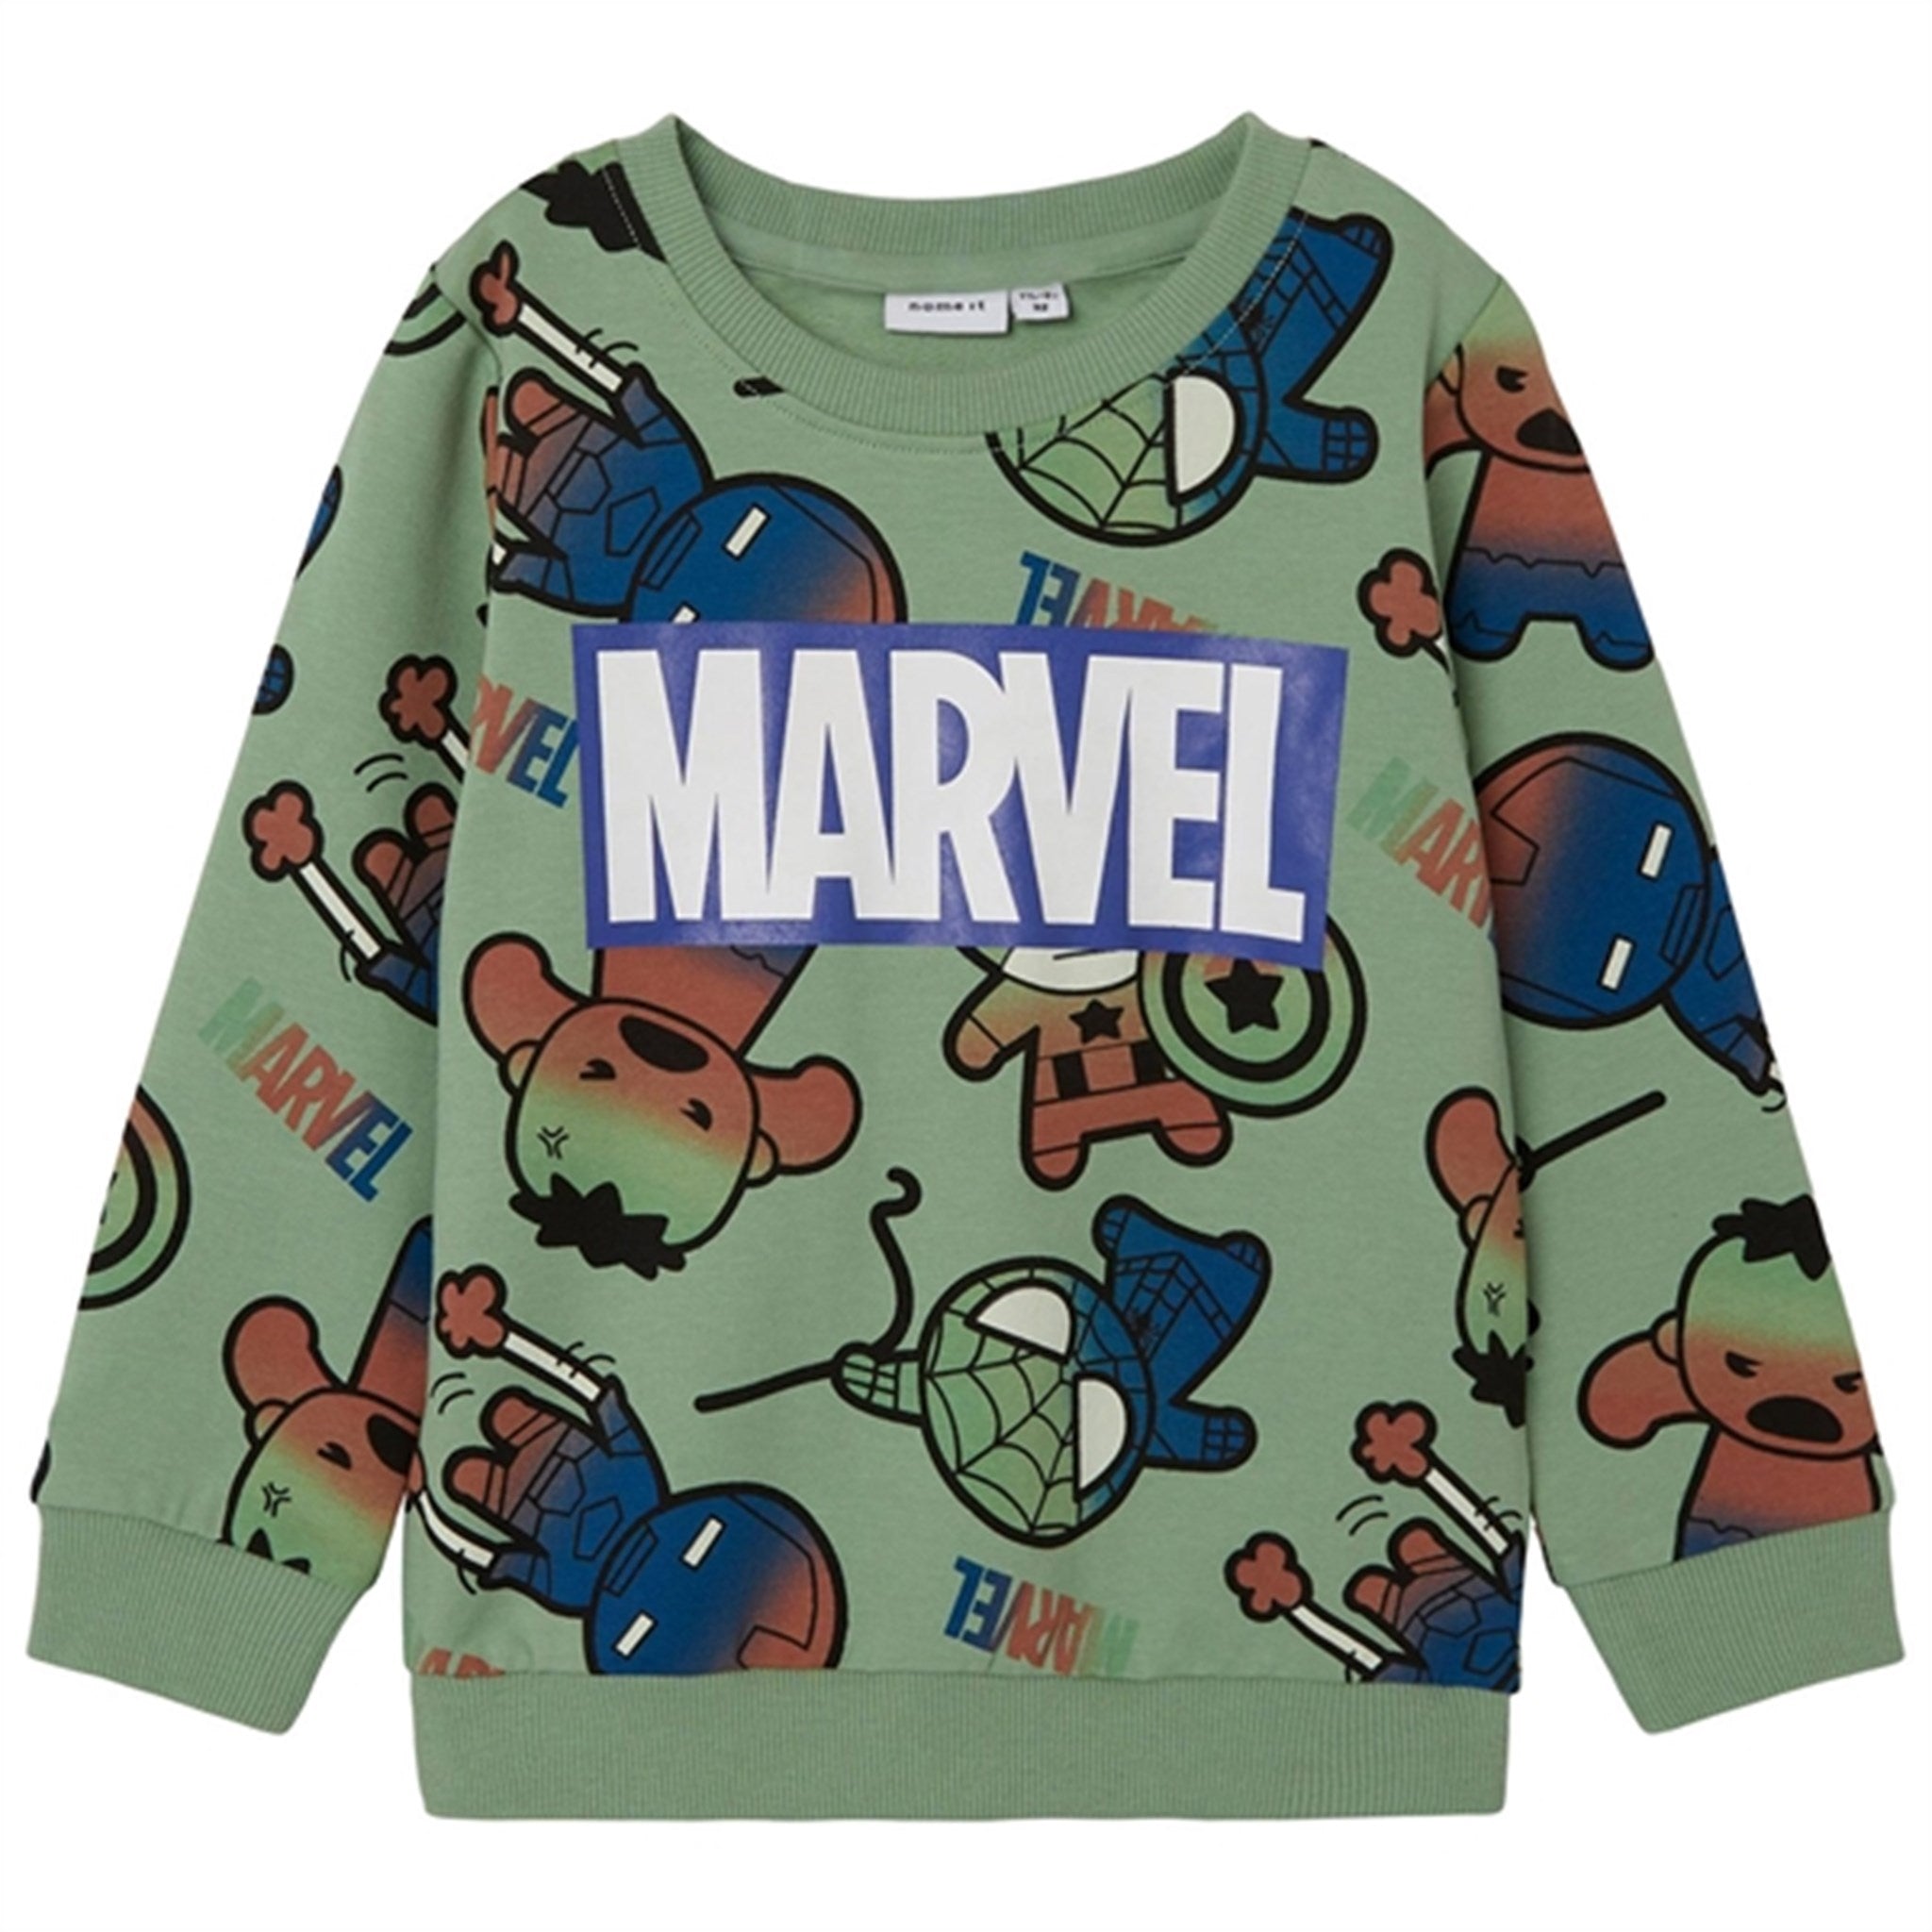 Name it Basil Filup Marvel Sweatshirt